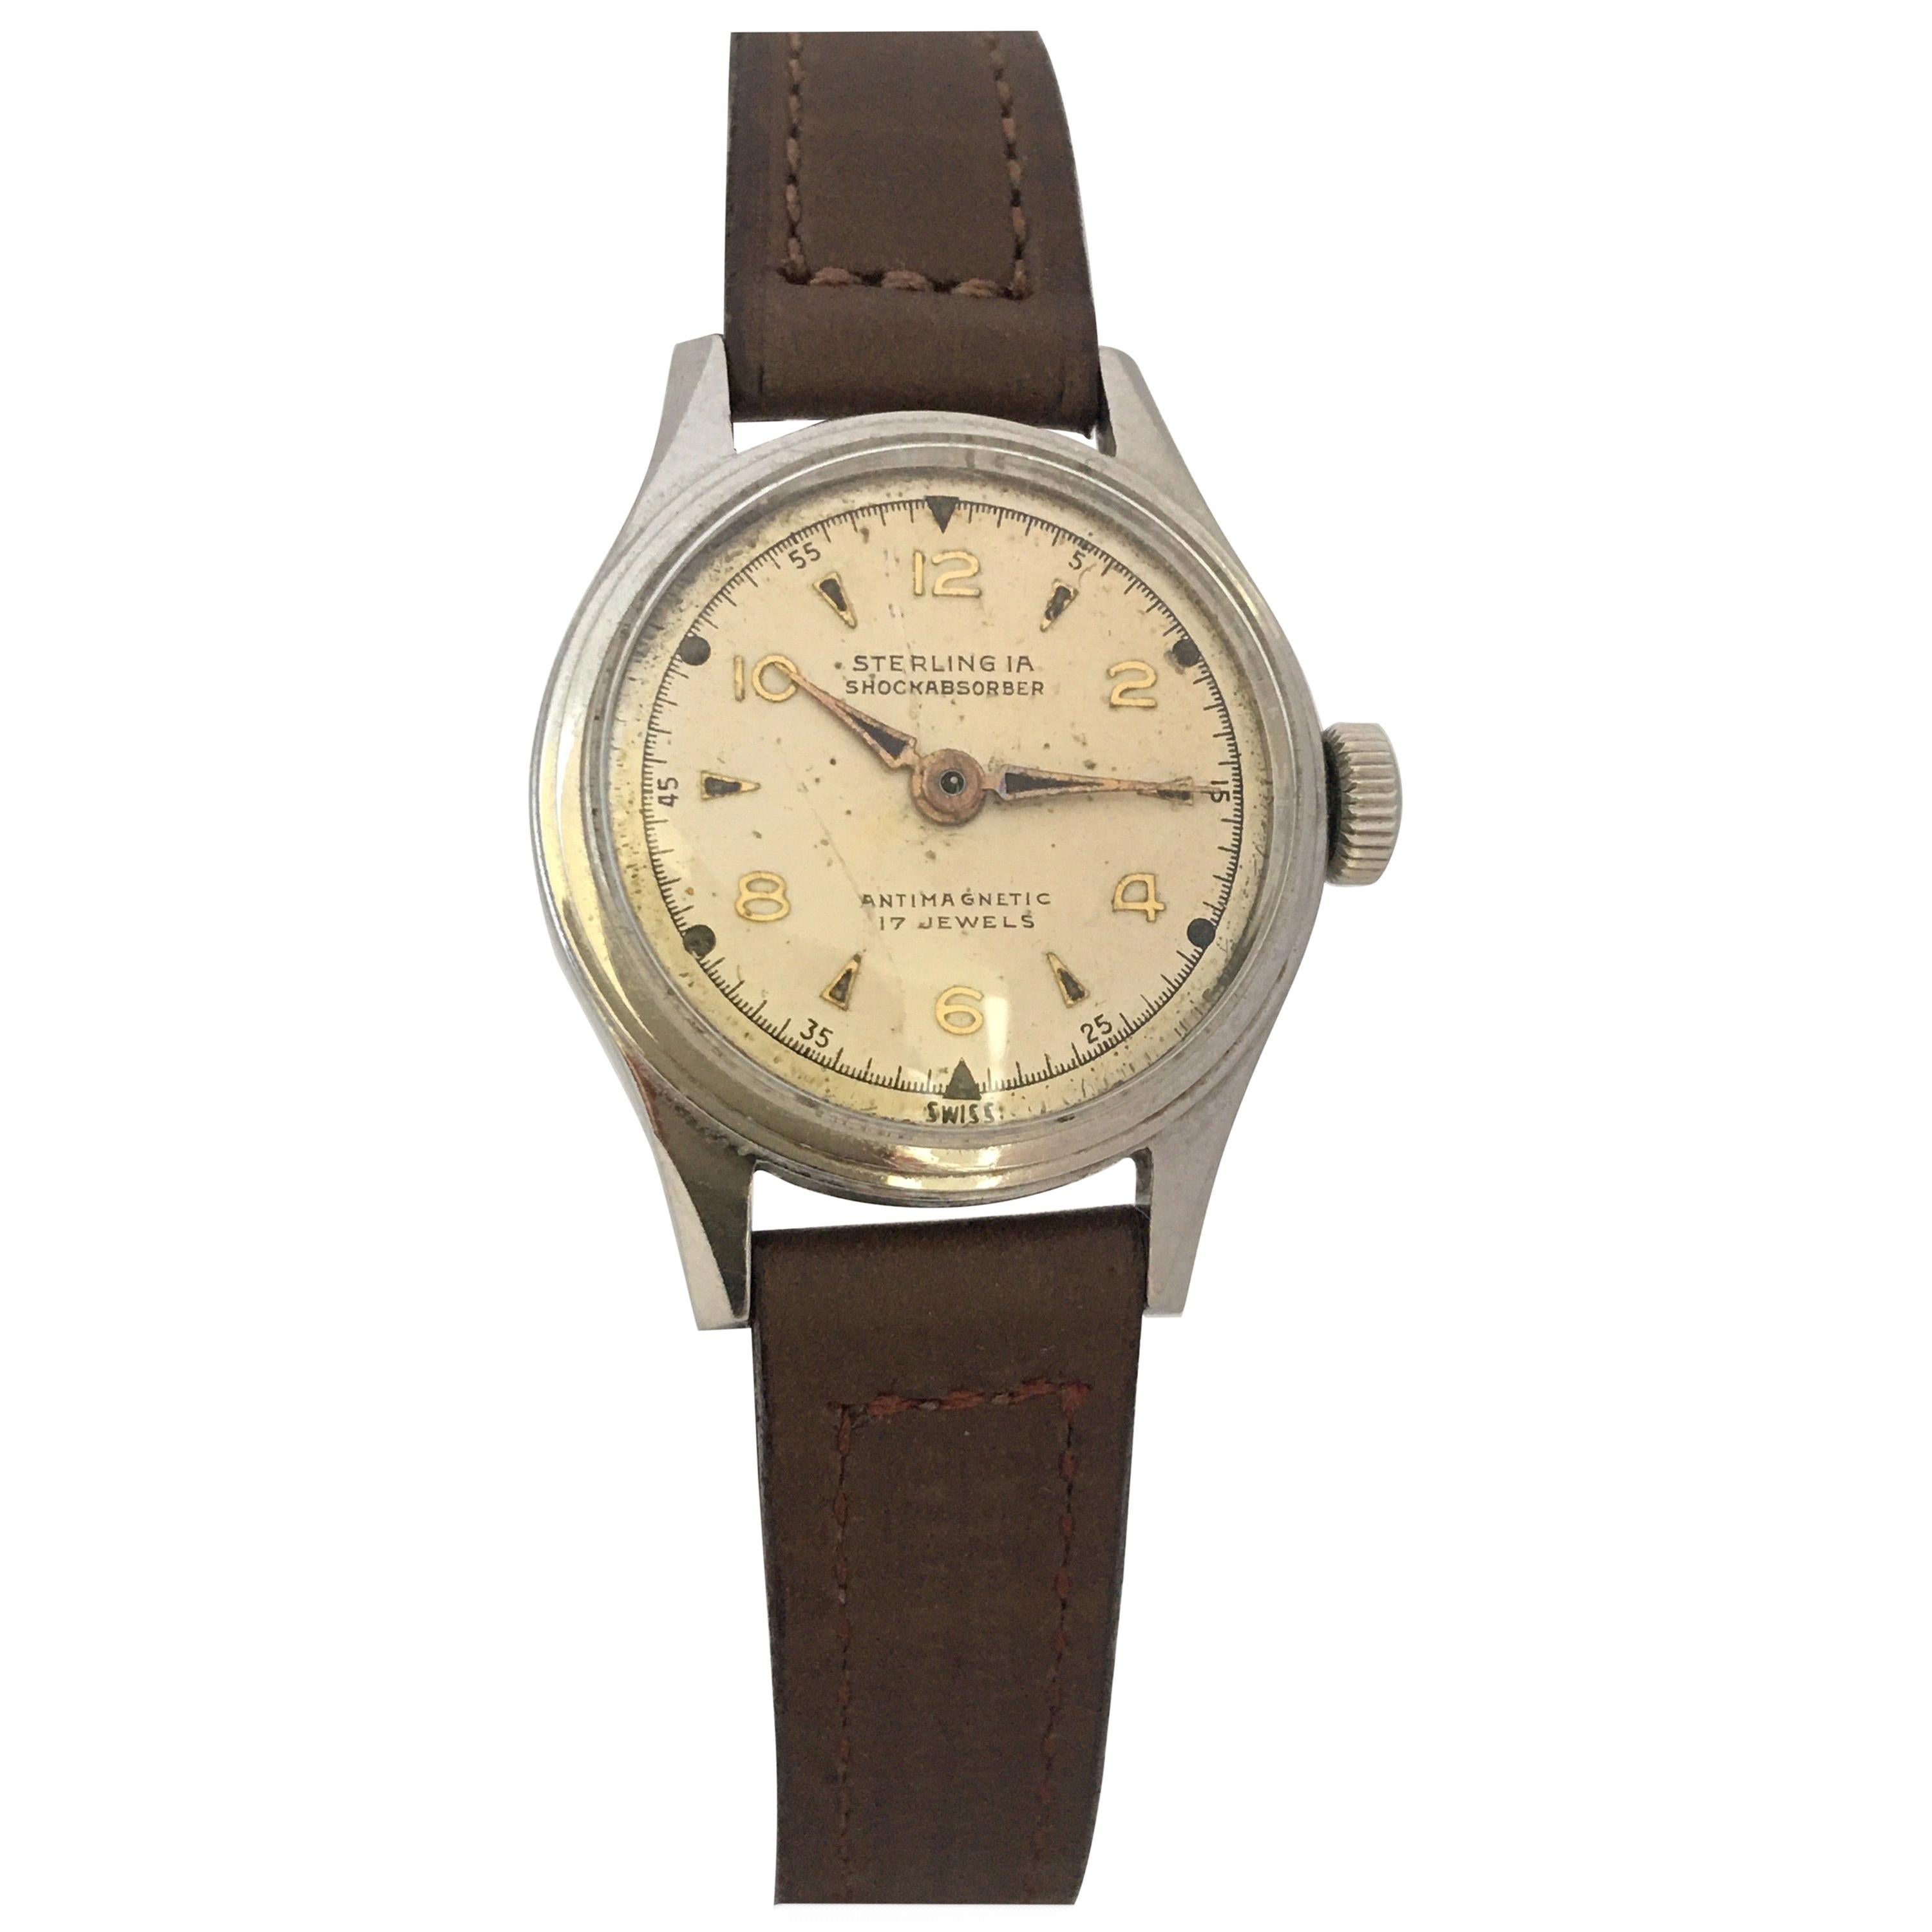 Vintage 1950s Stainless Steel Ladies Swiss Mechanical Watch